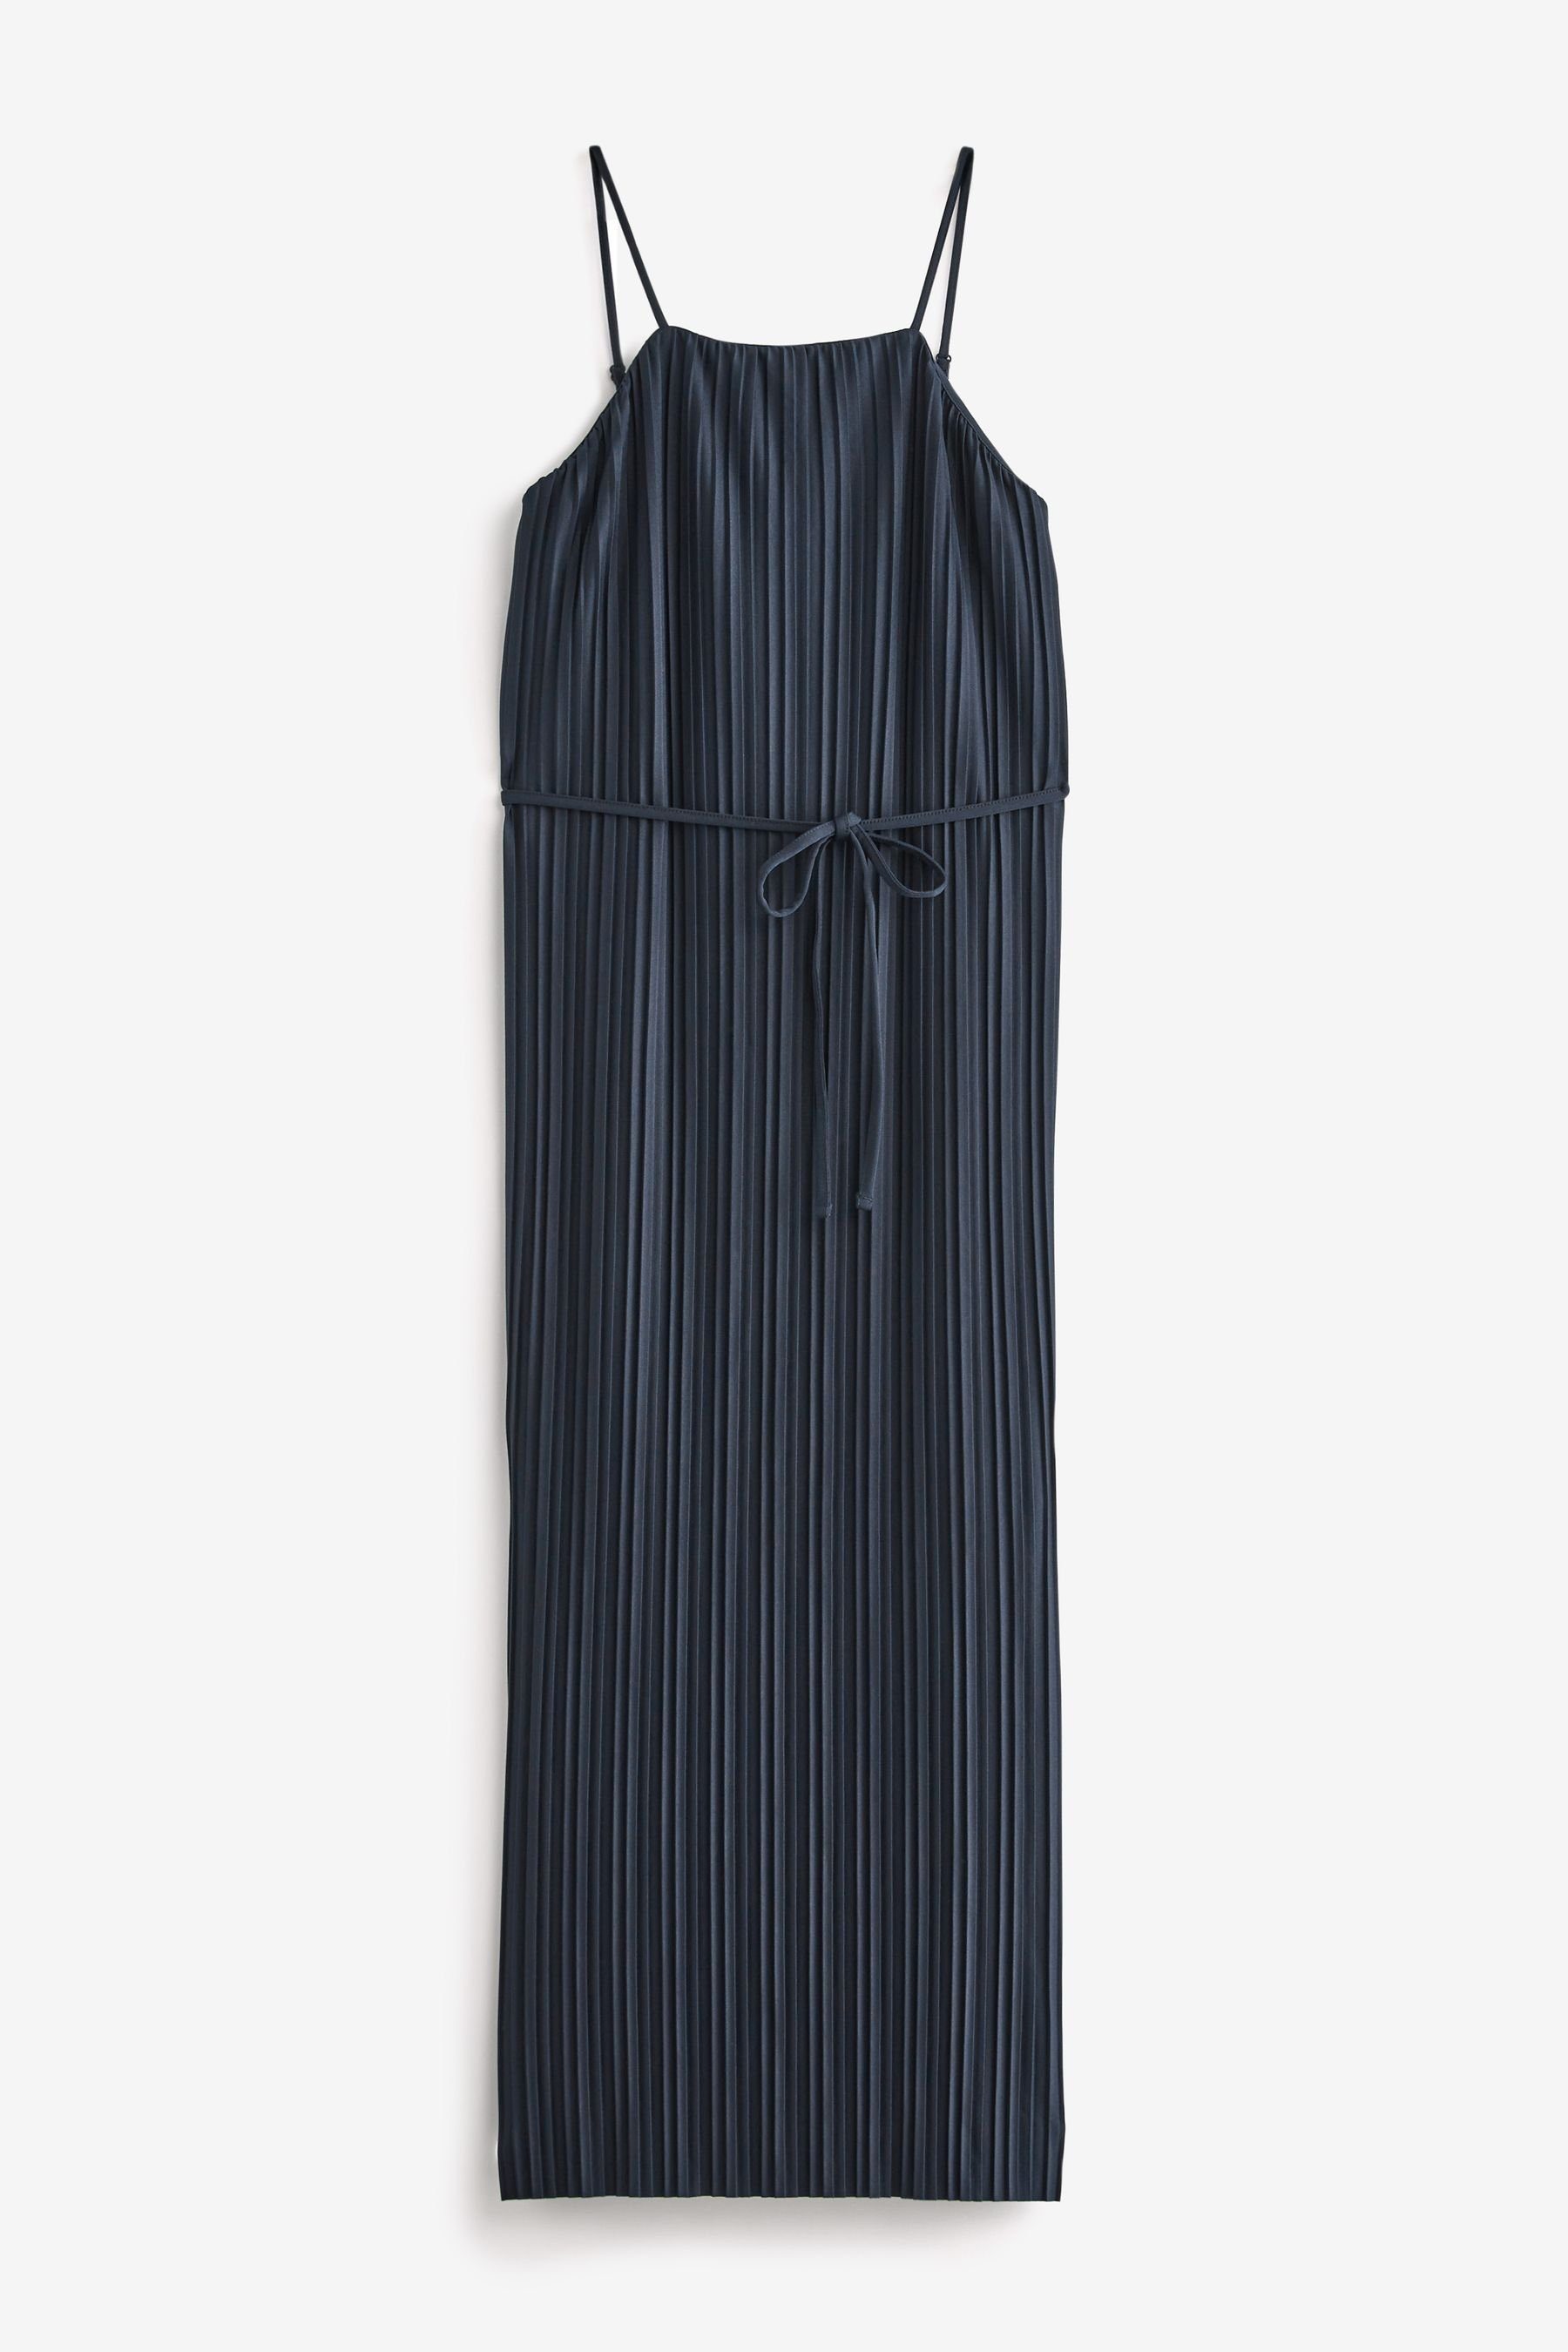 Midikleid aus (1-tlg), plissiertes Next England Mittellanges, Trägerkleid Aktuelles Design